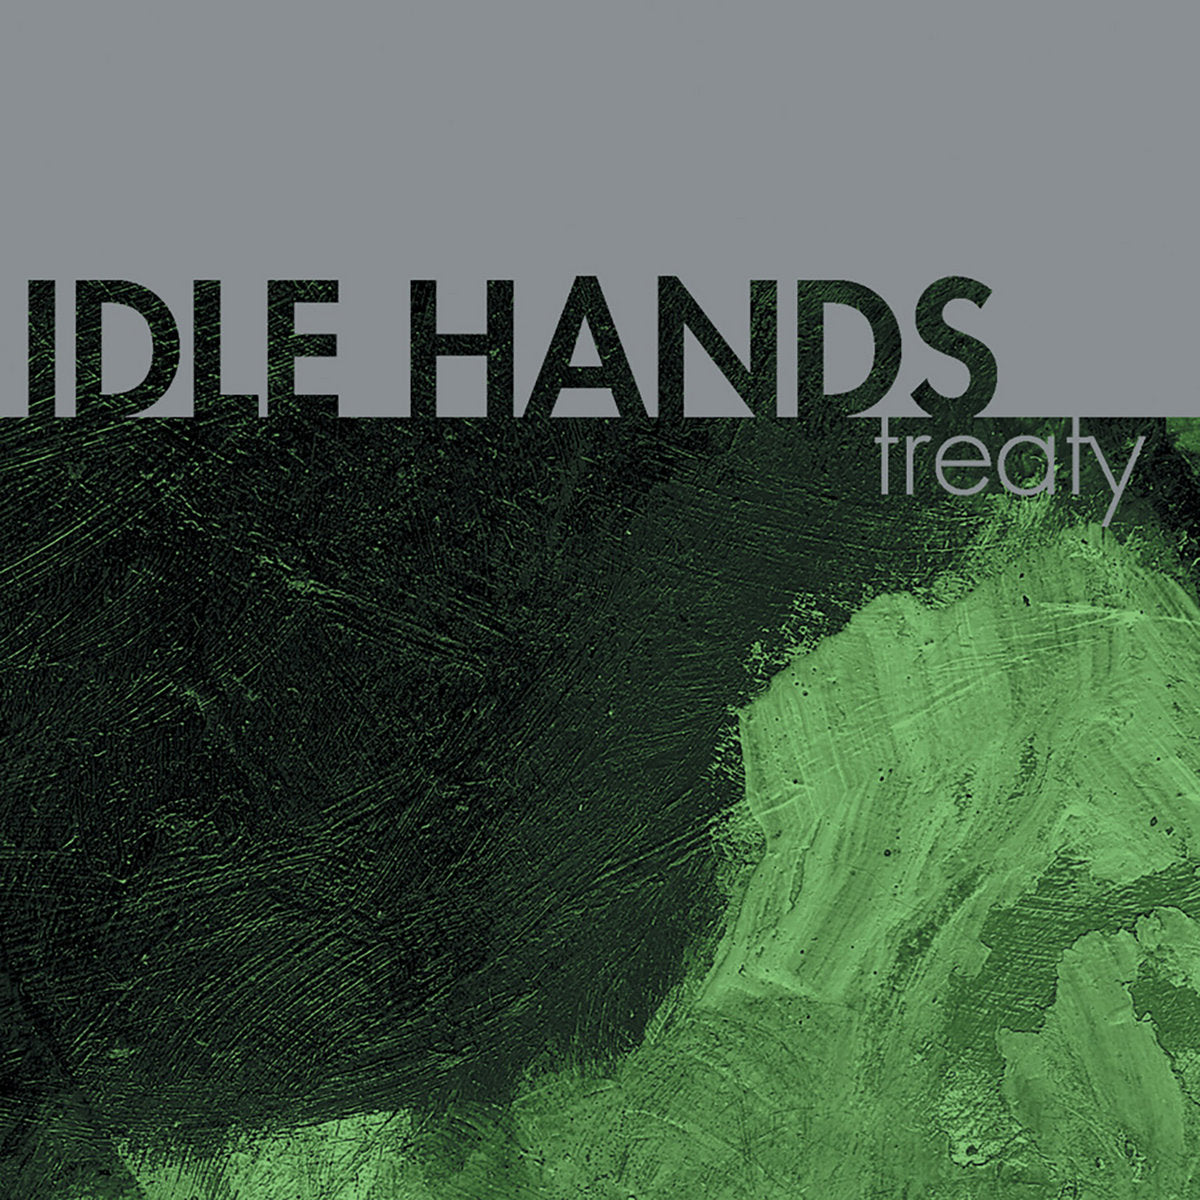 Idle Hands "Treaty" CD